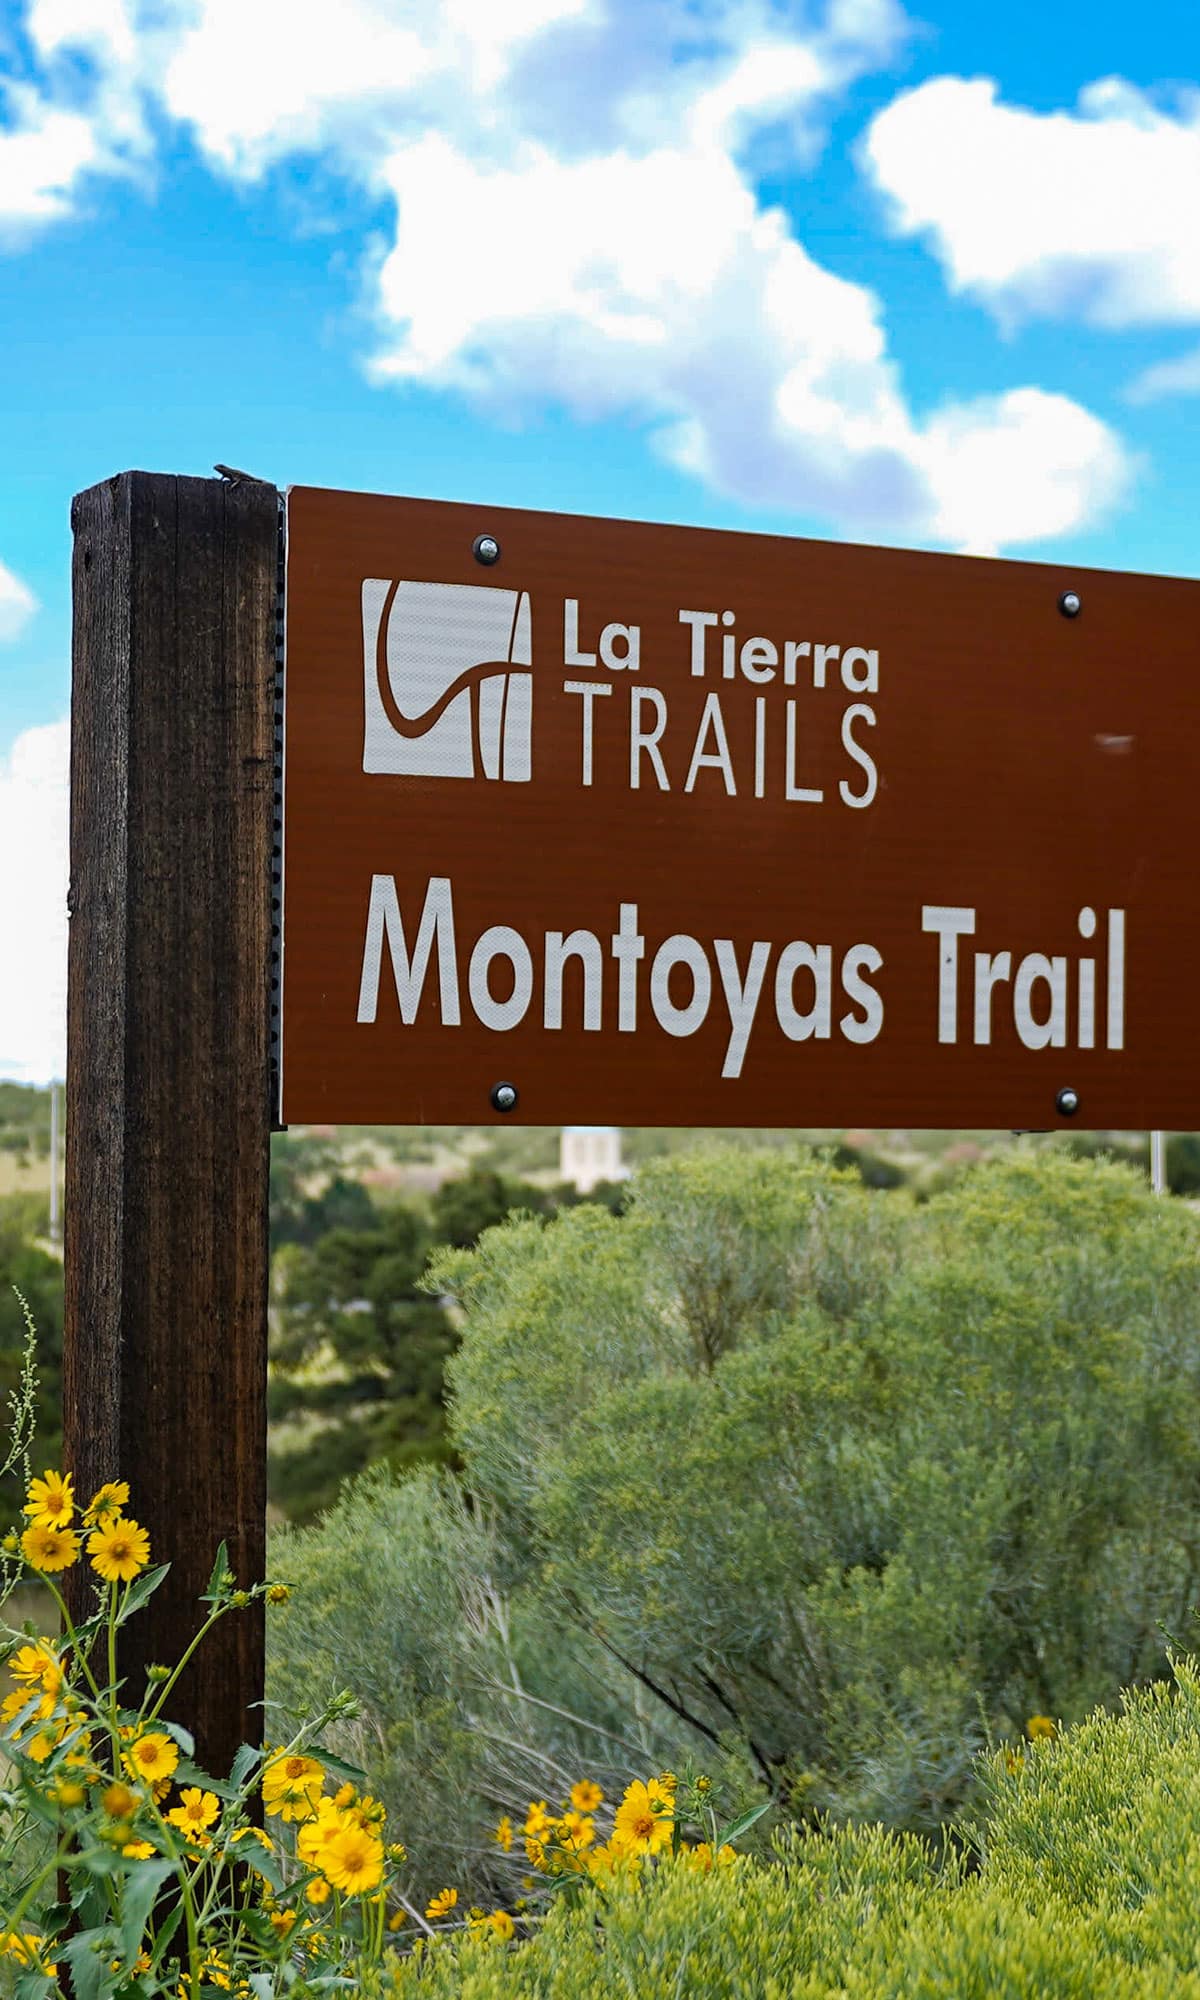 Sign marking the La Tierra Trails, Montoyas Trail.